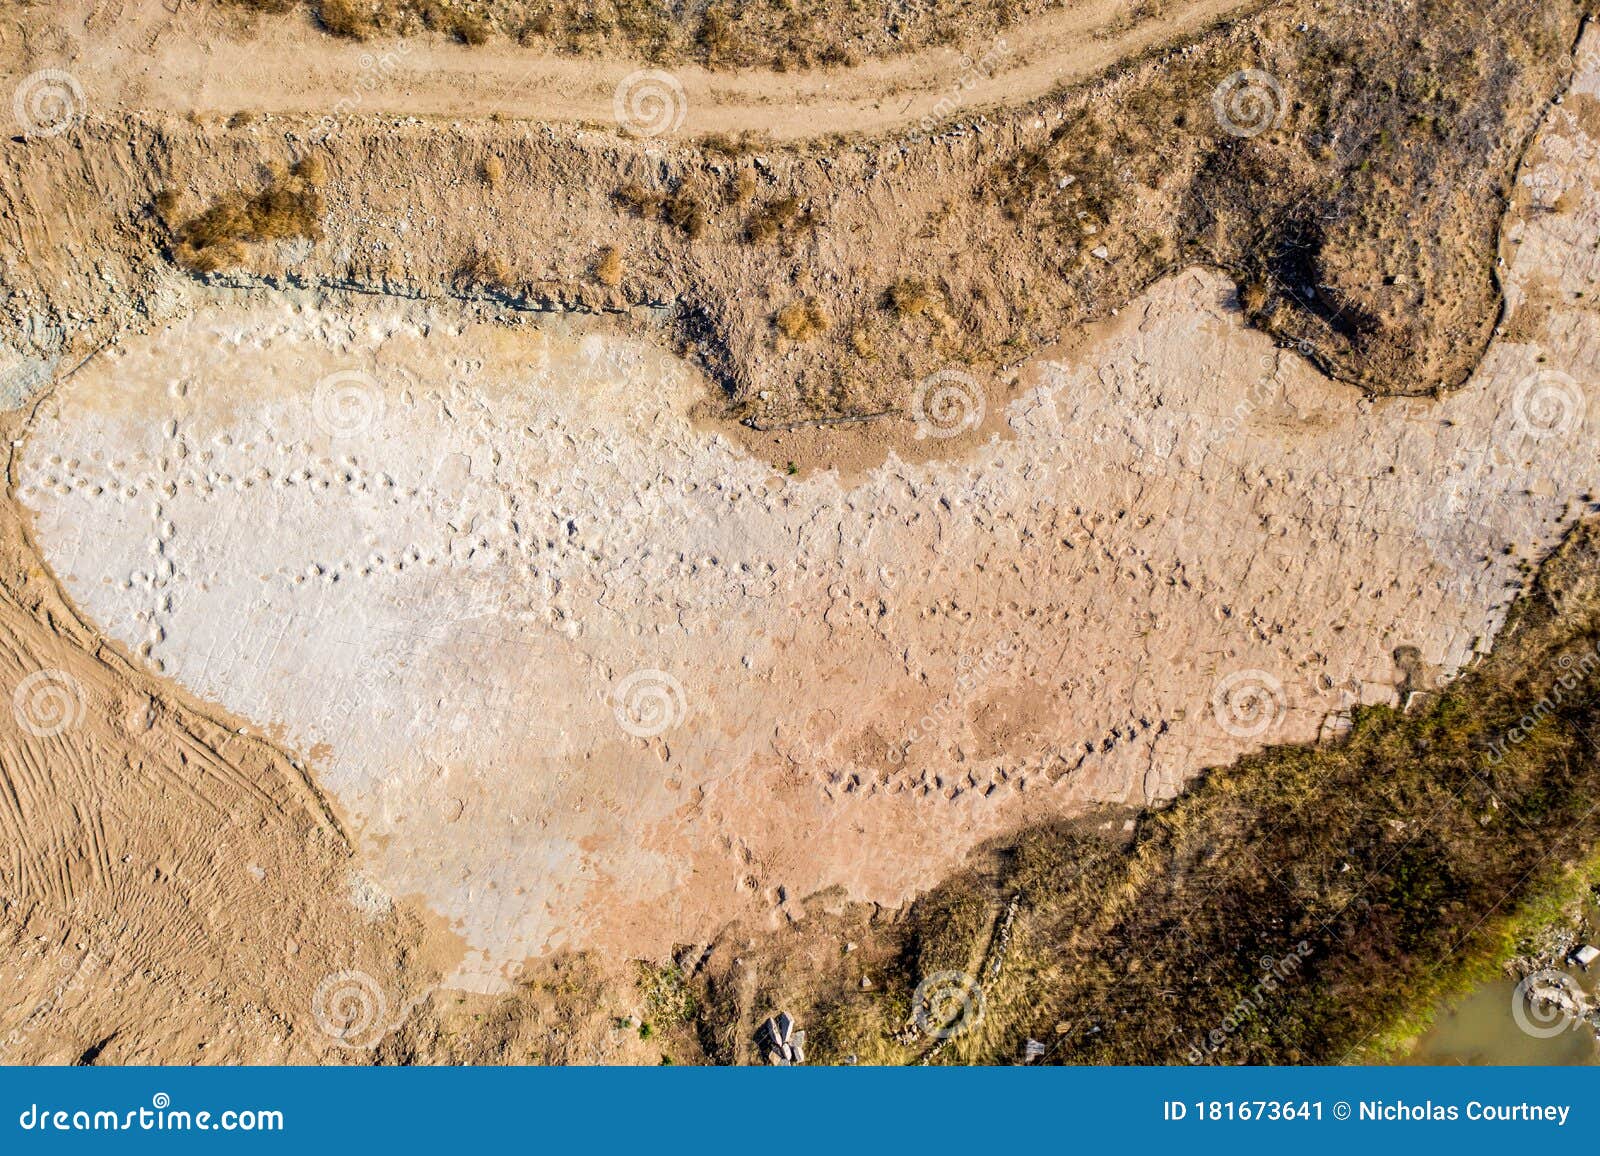 dinosaur tracks of comanche national grassland.  la junta, colorado.  aerial drone photo